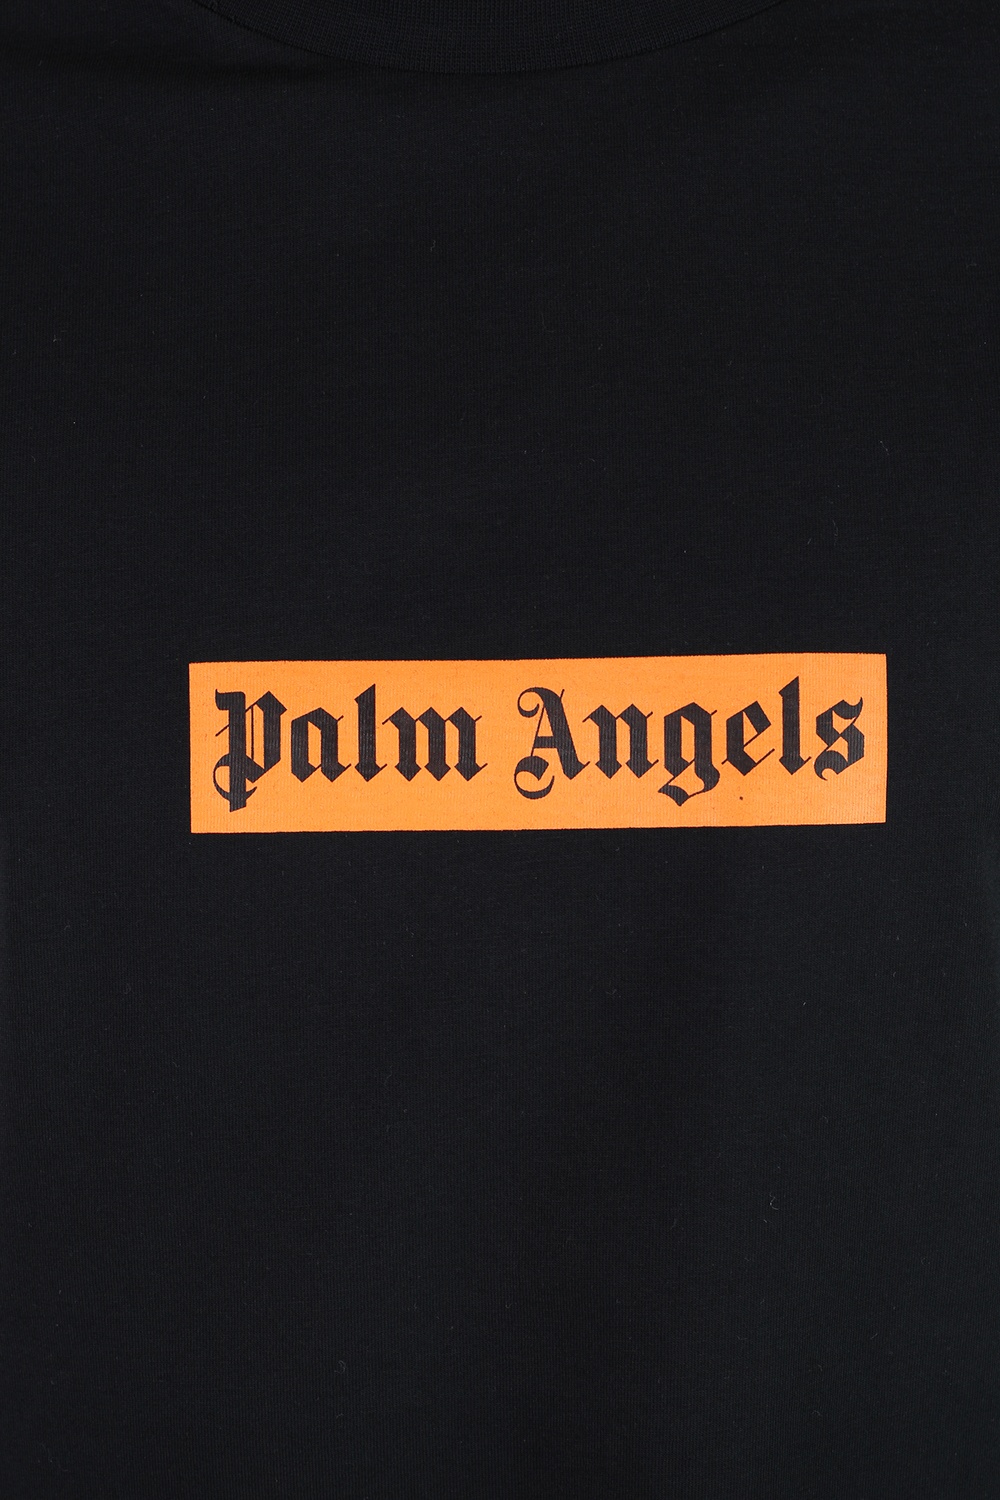 black and orange palm angels shirt